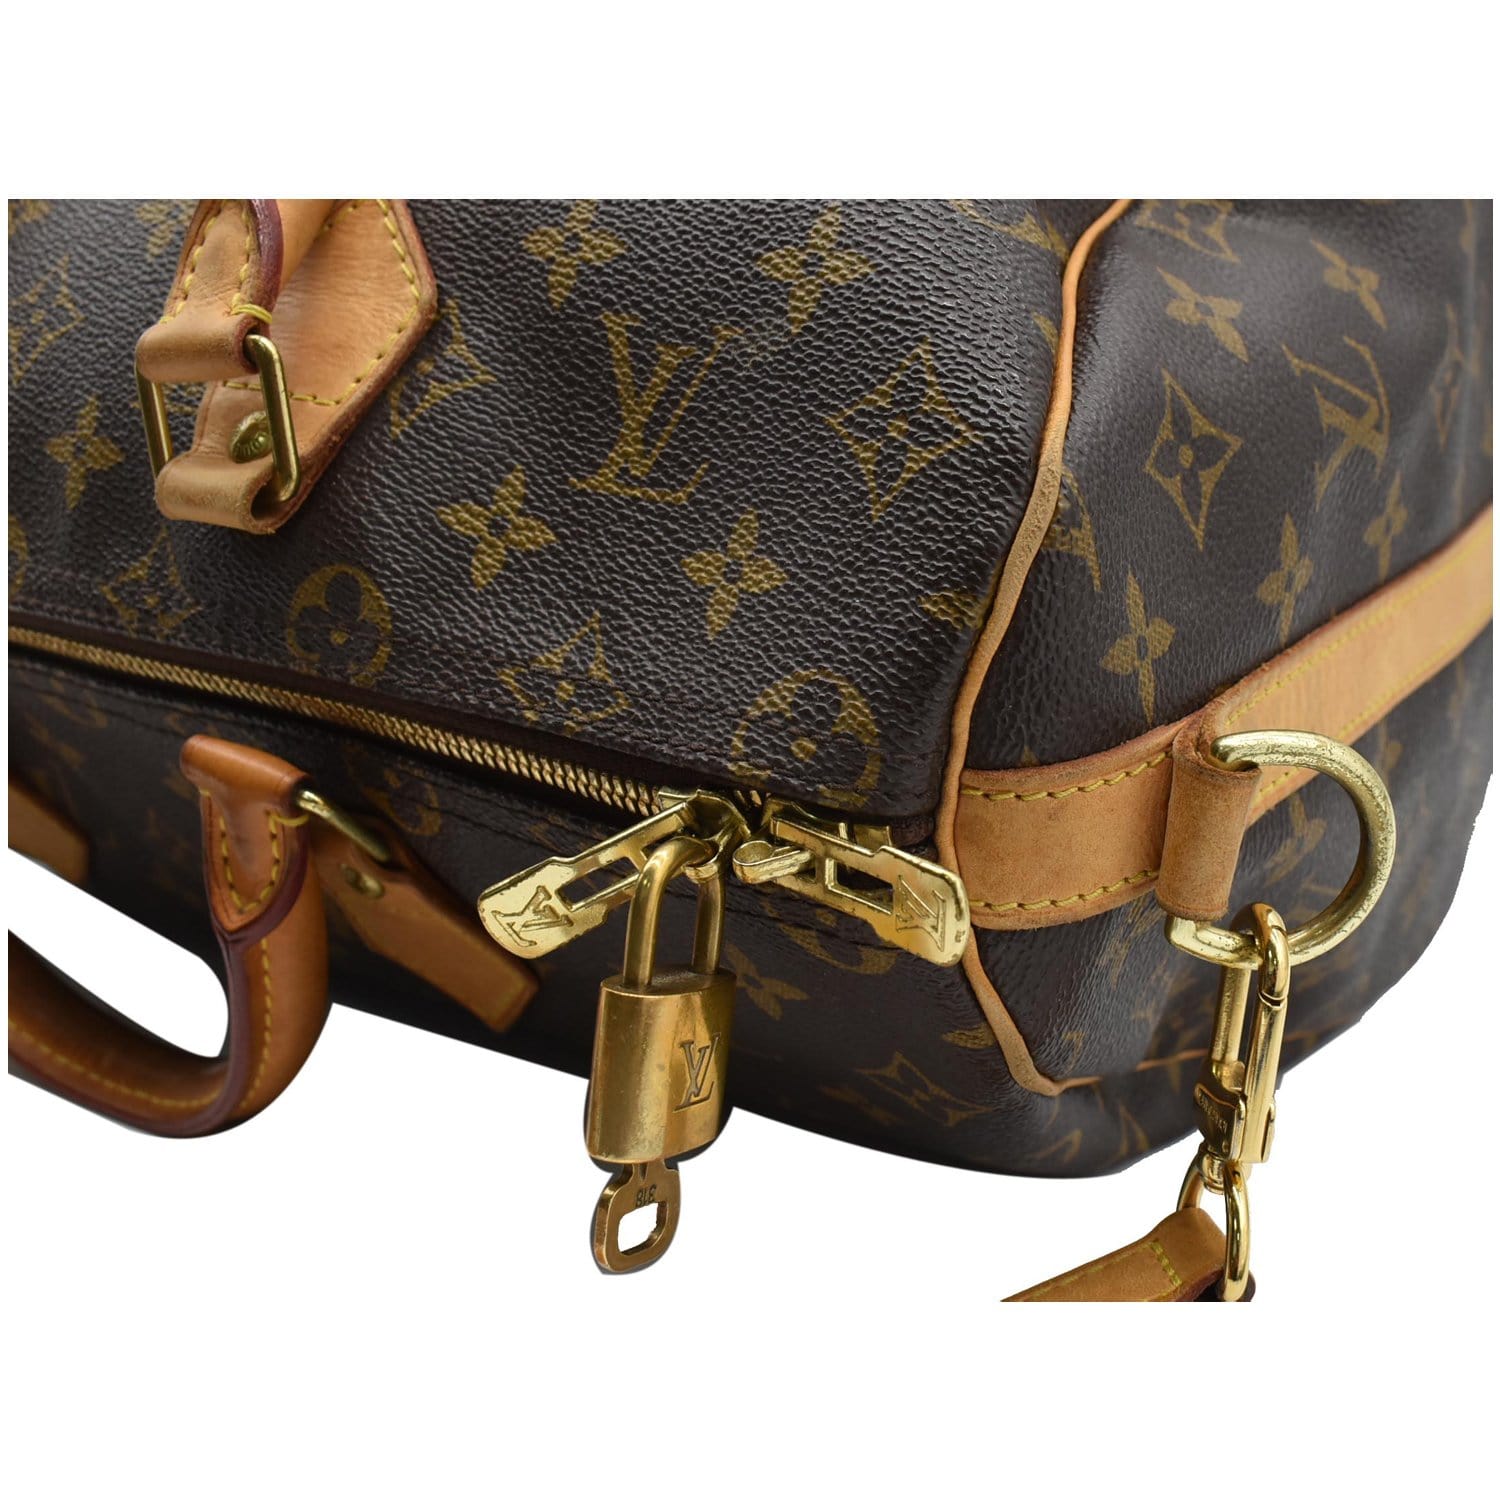 Louis Vuitton 2013 Monogram Canvas Speedy 30 Bag For Sale at